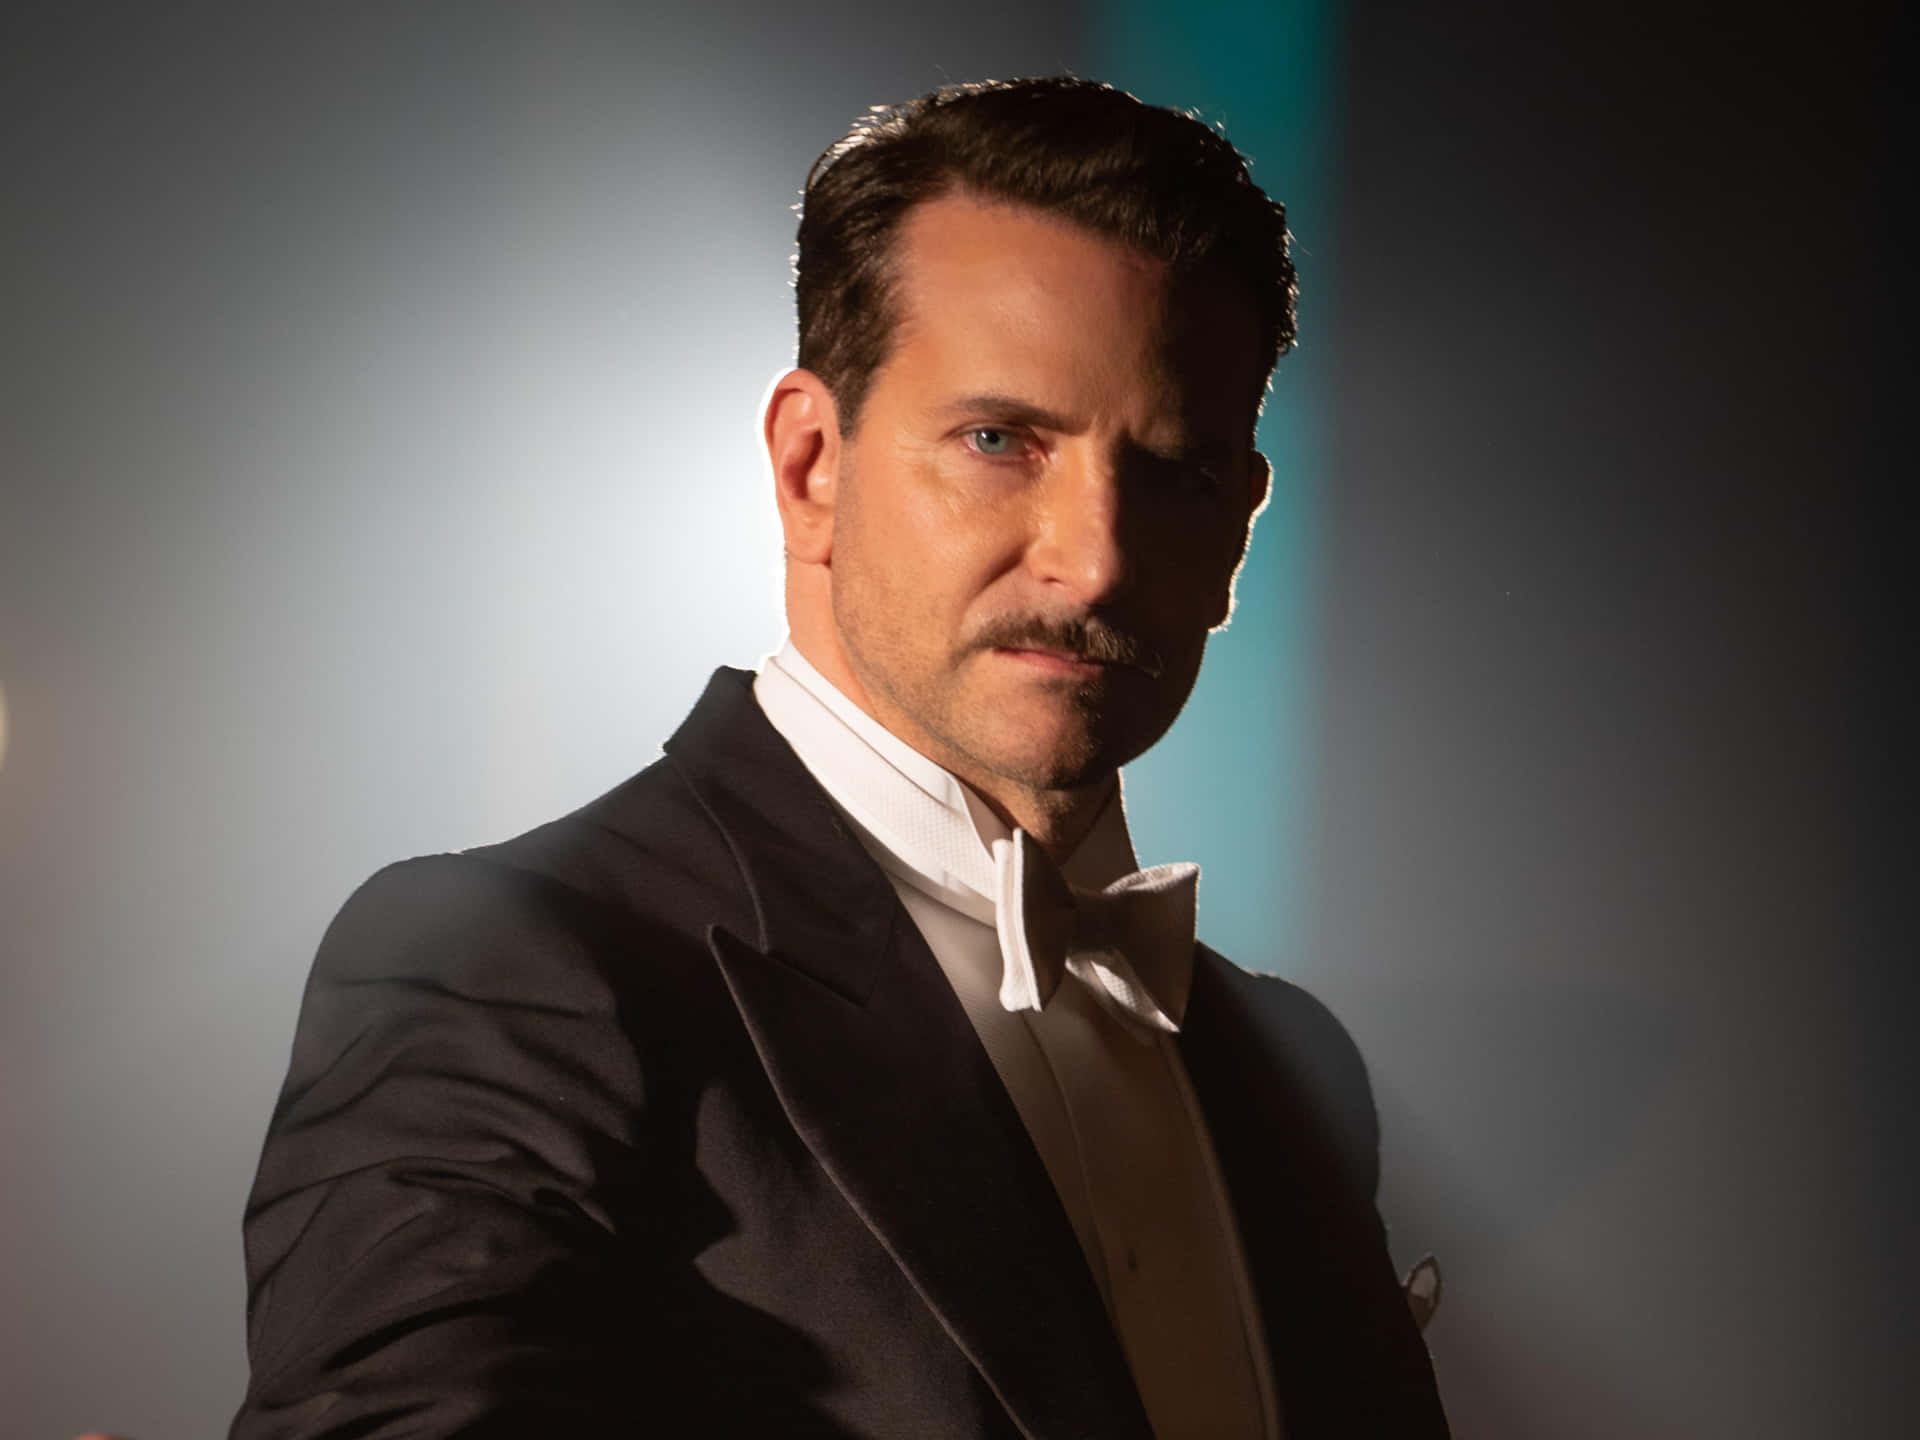 Suits : Bradley Cooper The Hangover Black Suit